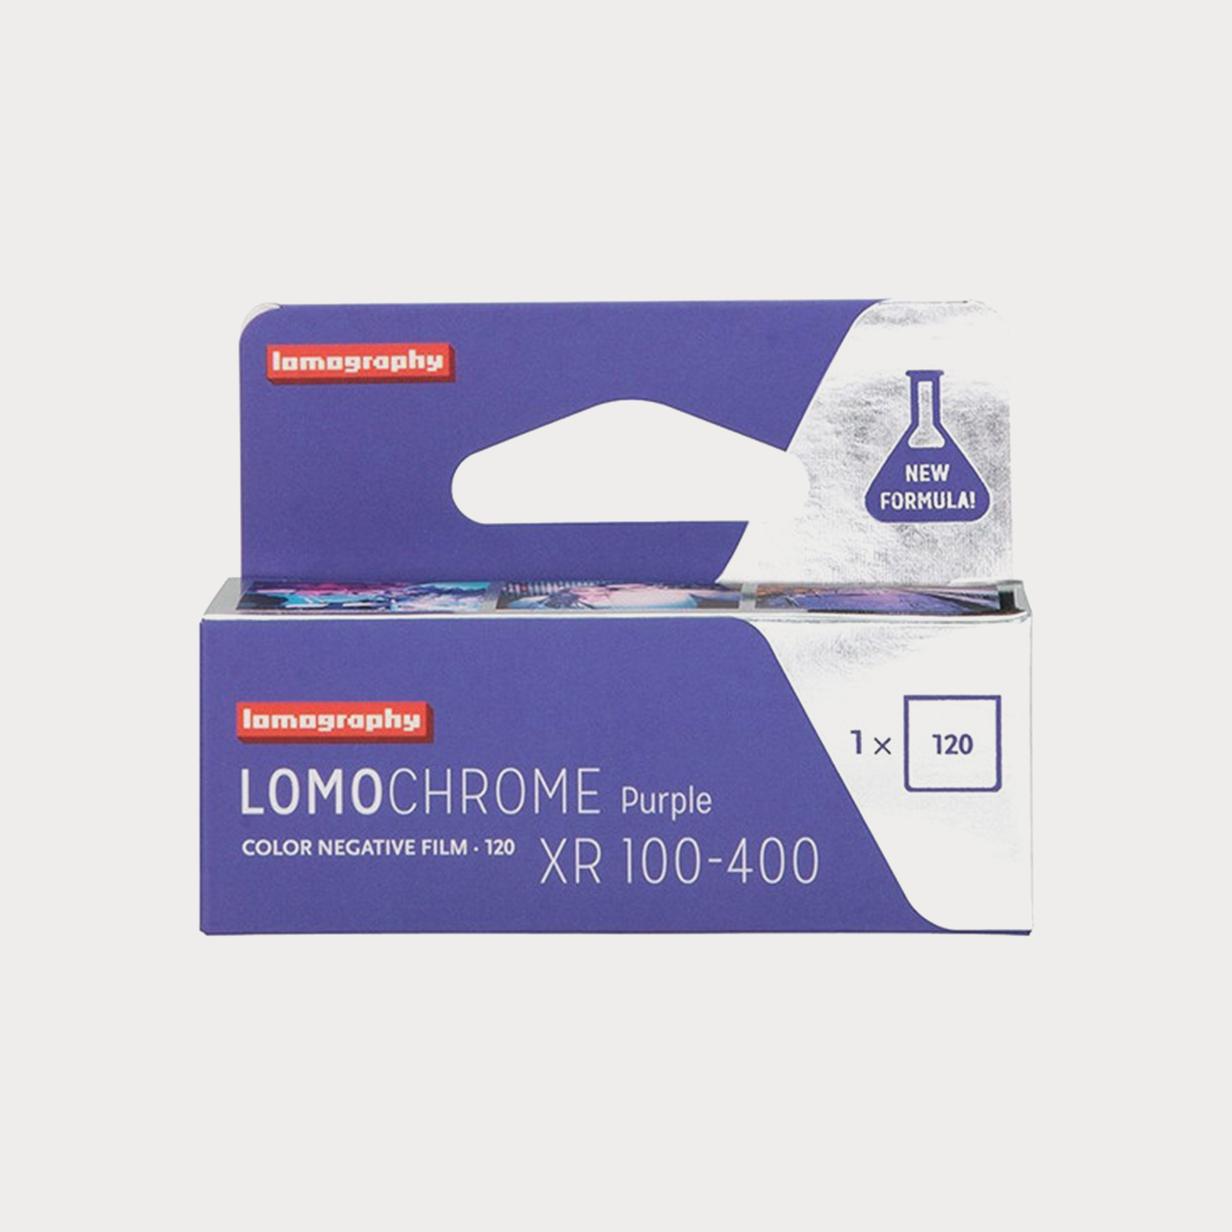 Moment lomography F4120 LC19 Lomo Chrome Purple XR 100 400 120 ASA Single Pack 01